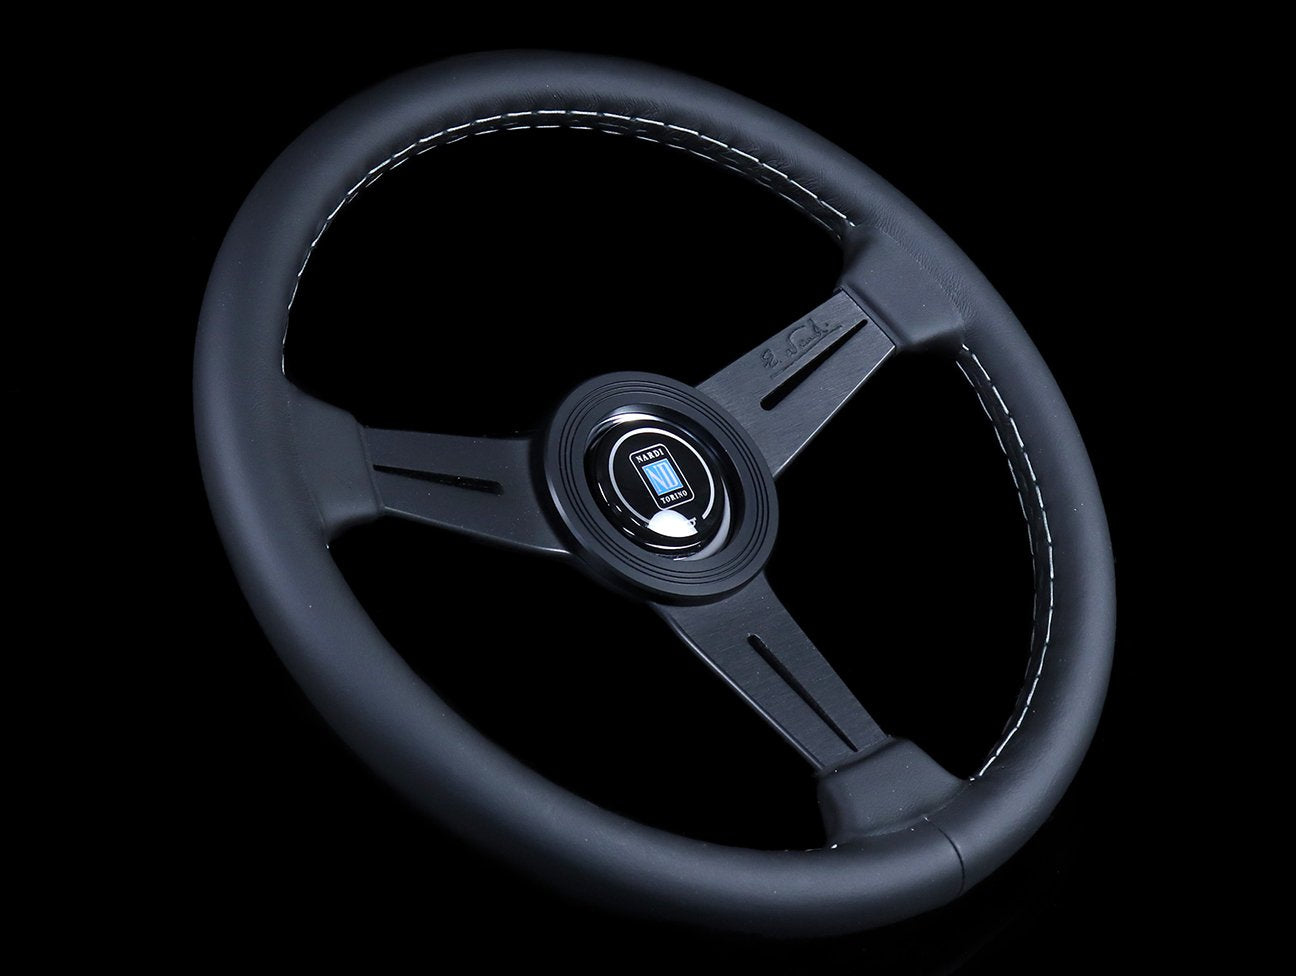 Nardi Classic 330mm Steering Wheel - Black Leather / Grey Stitch